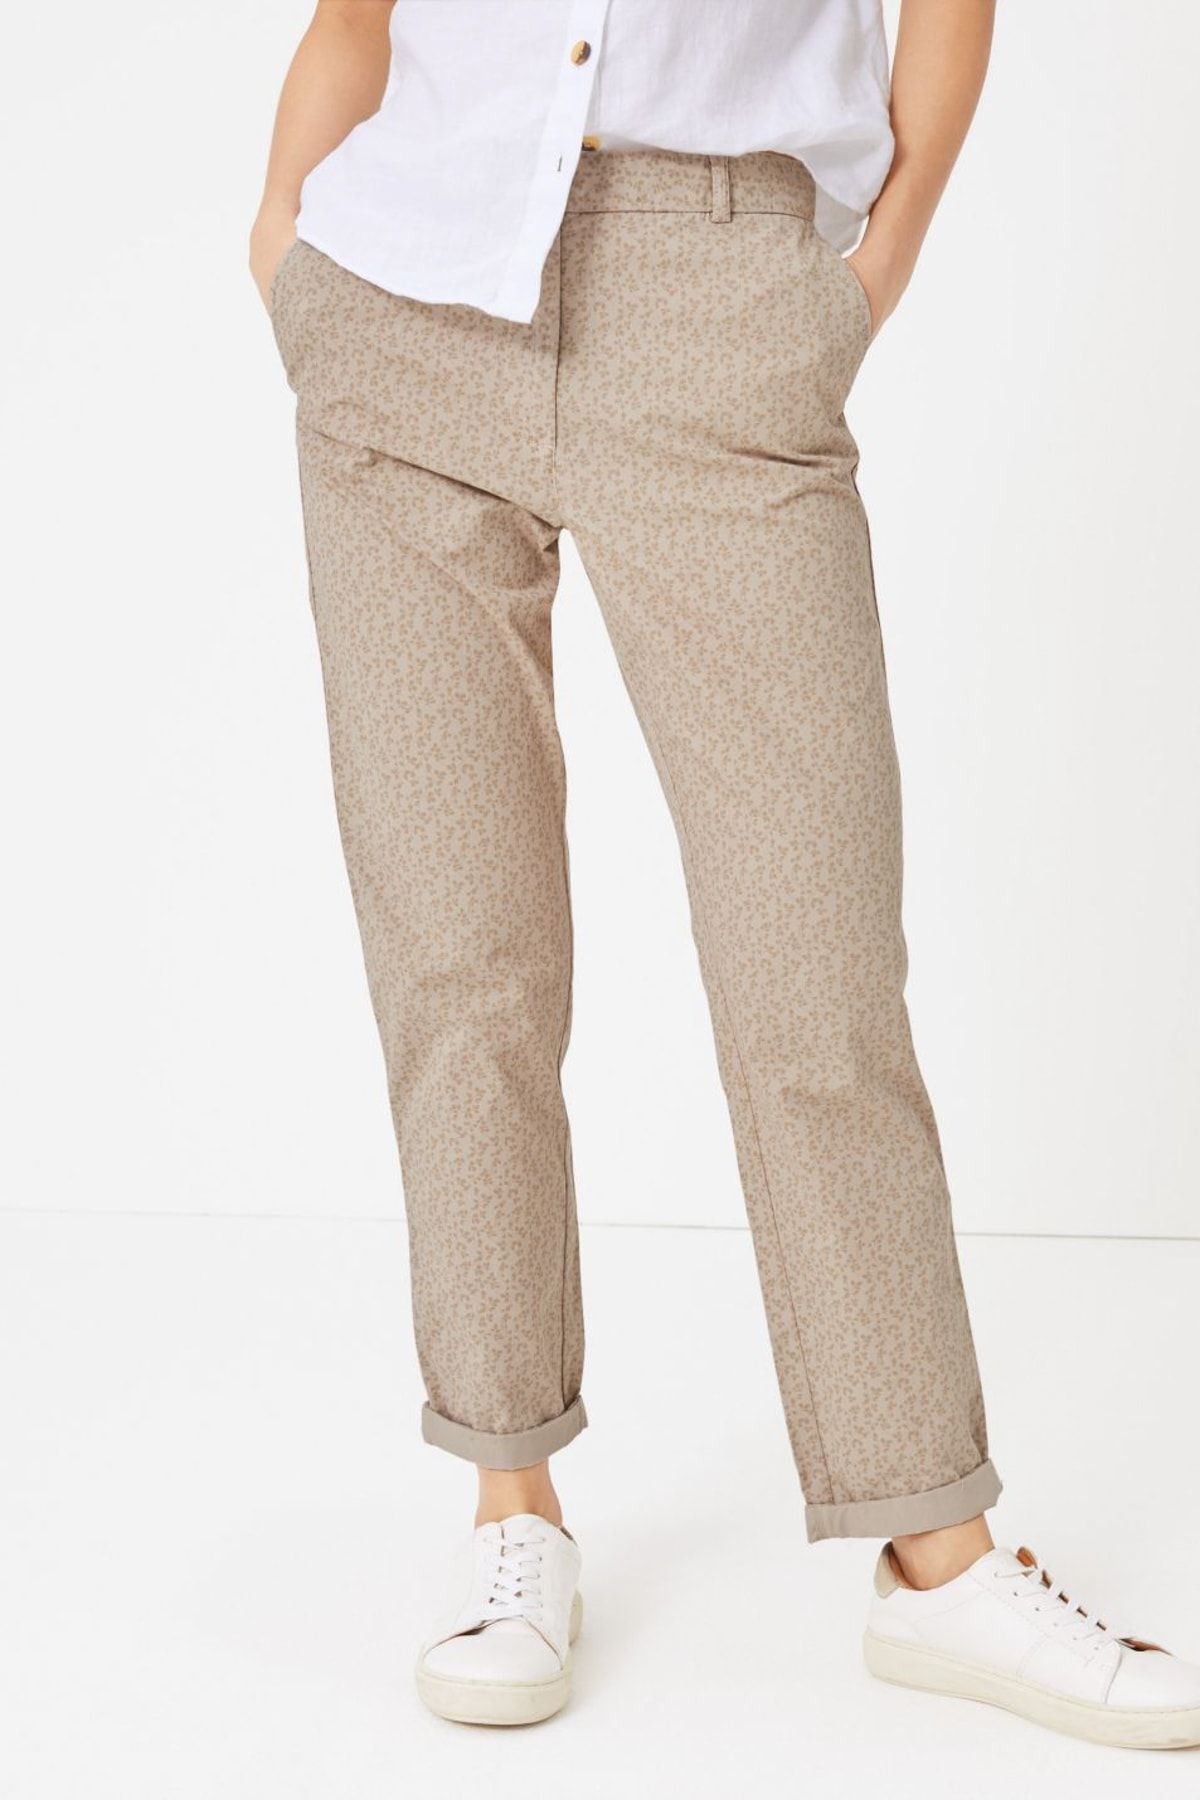 Marks & Spencer Kadın Multi Renk Çiçek Desenli Tapered Chino Pantolon T57006530M